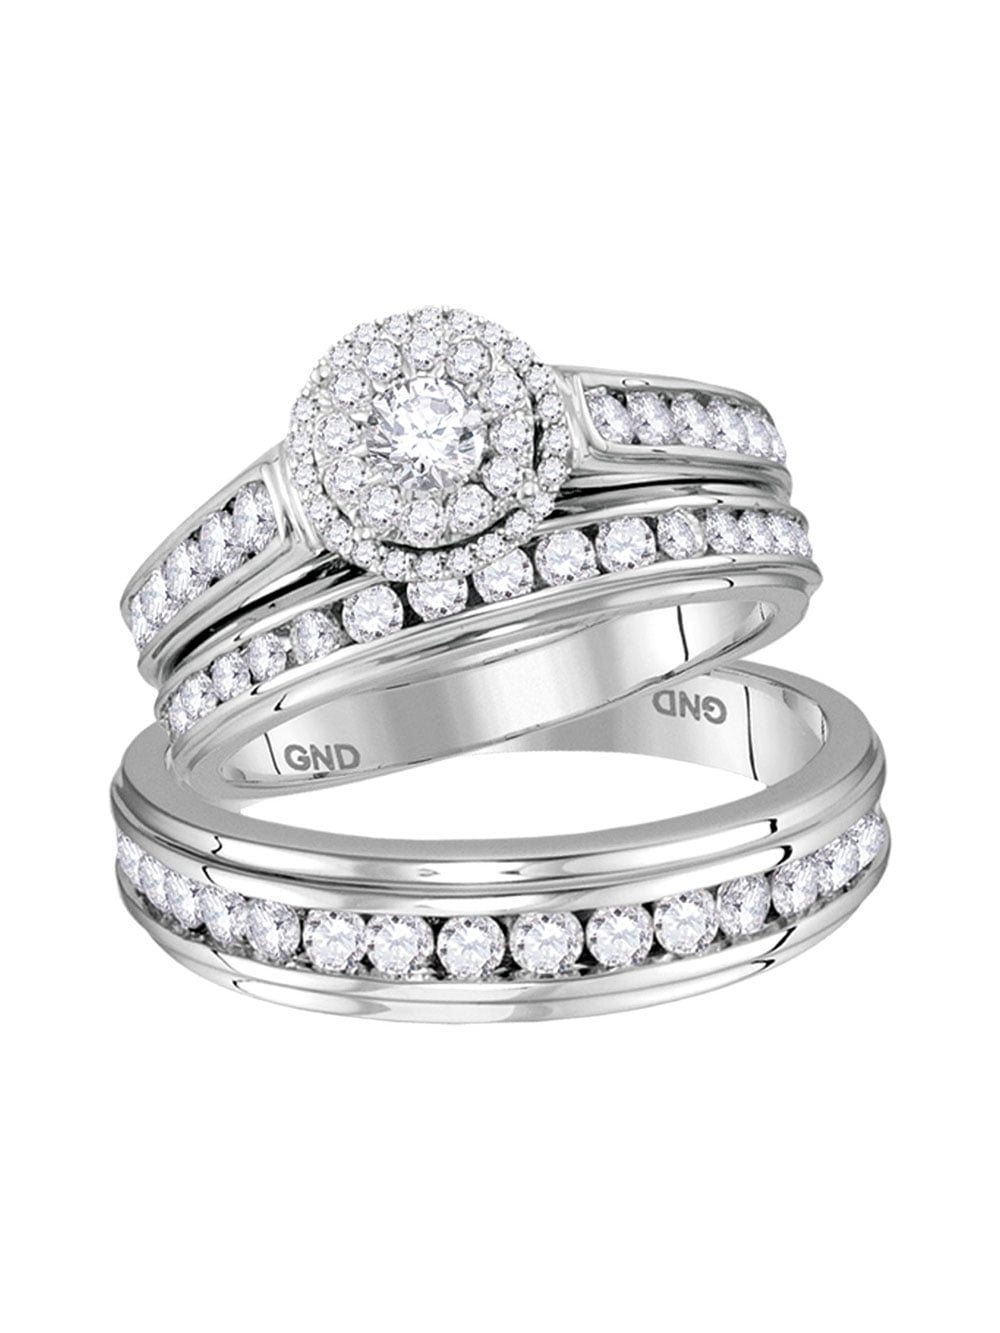 charms 2.5ct round cut diamond couple wedding ring trio set 14k yellow gold over 